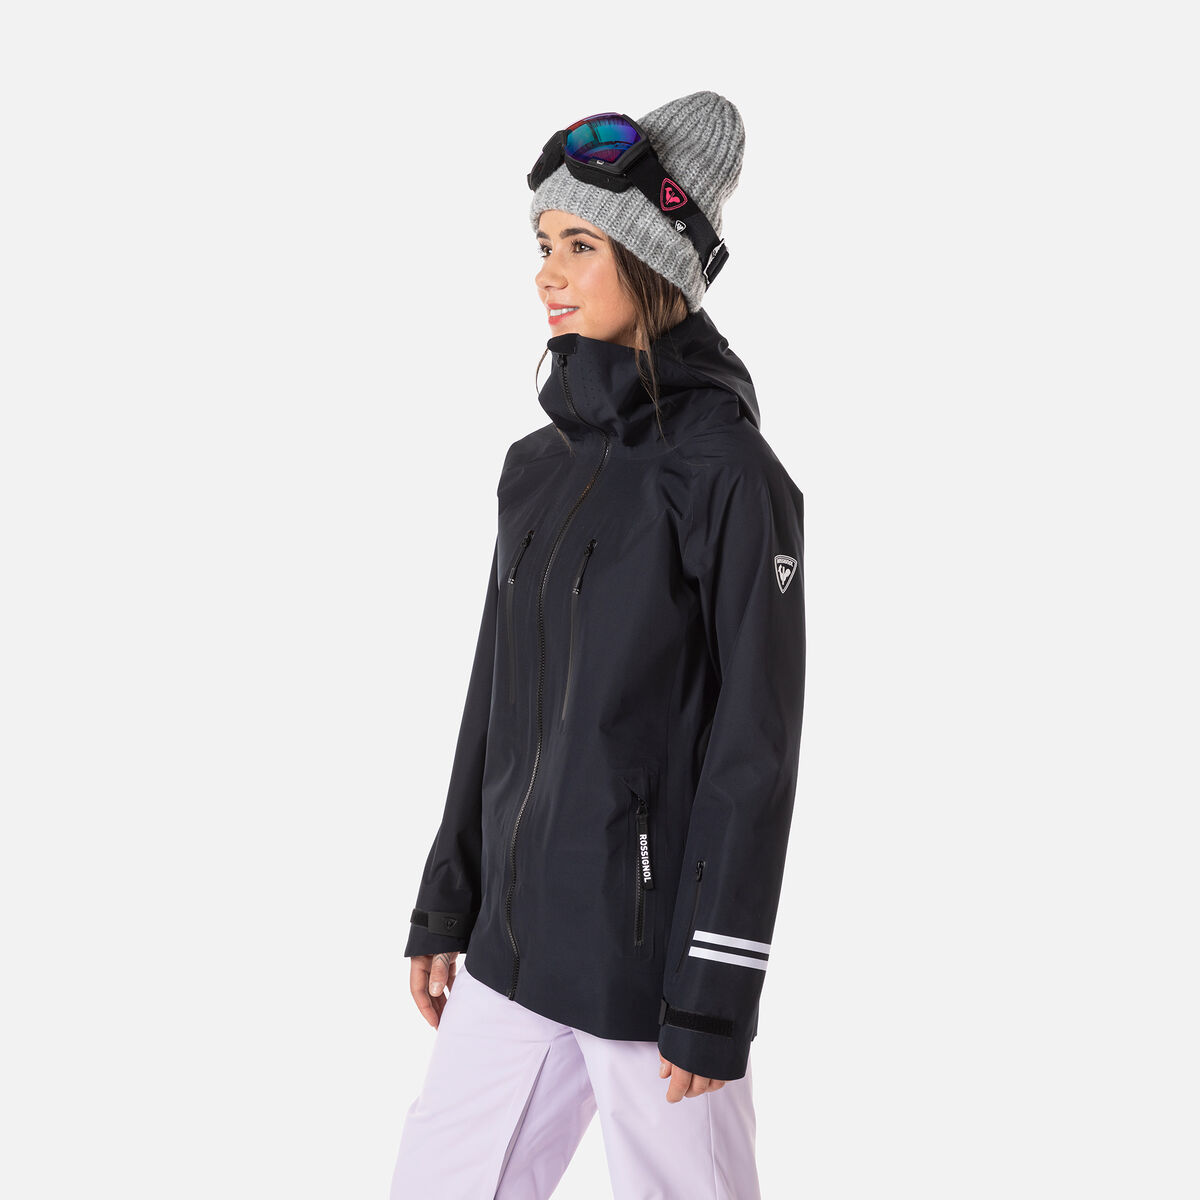 Rossignol Women's Atelier S Ski Jacket Black